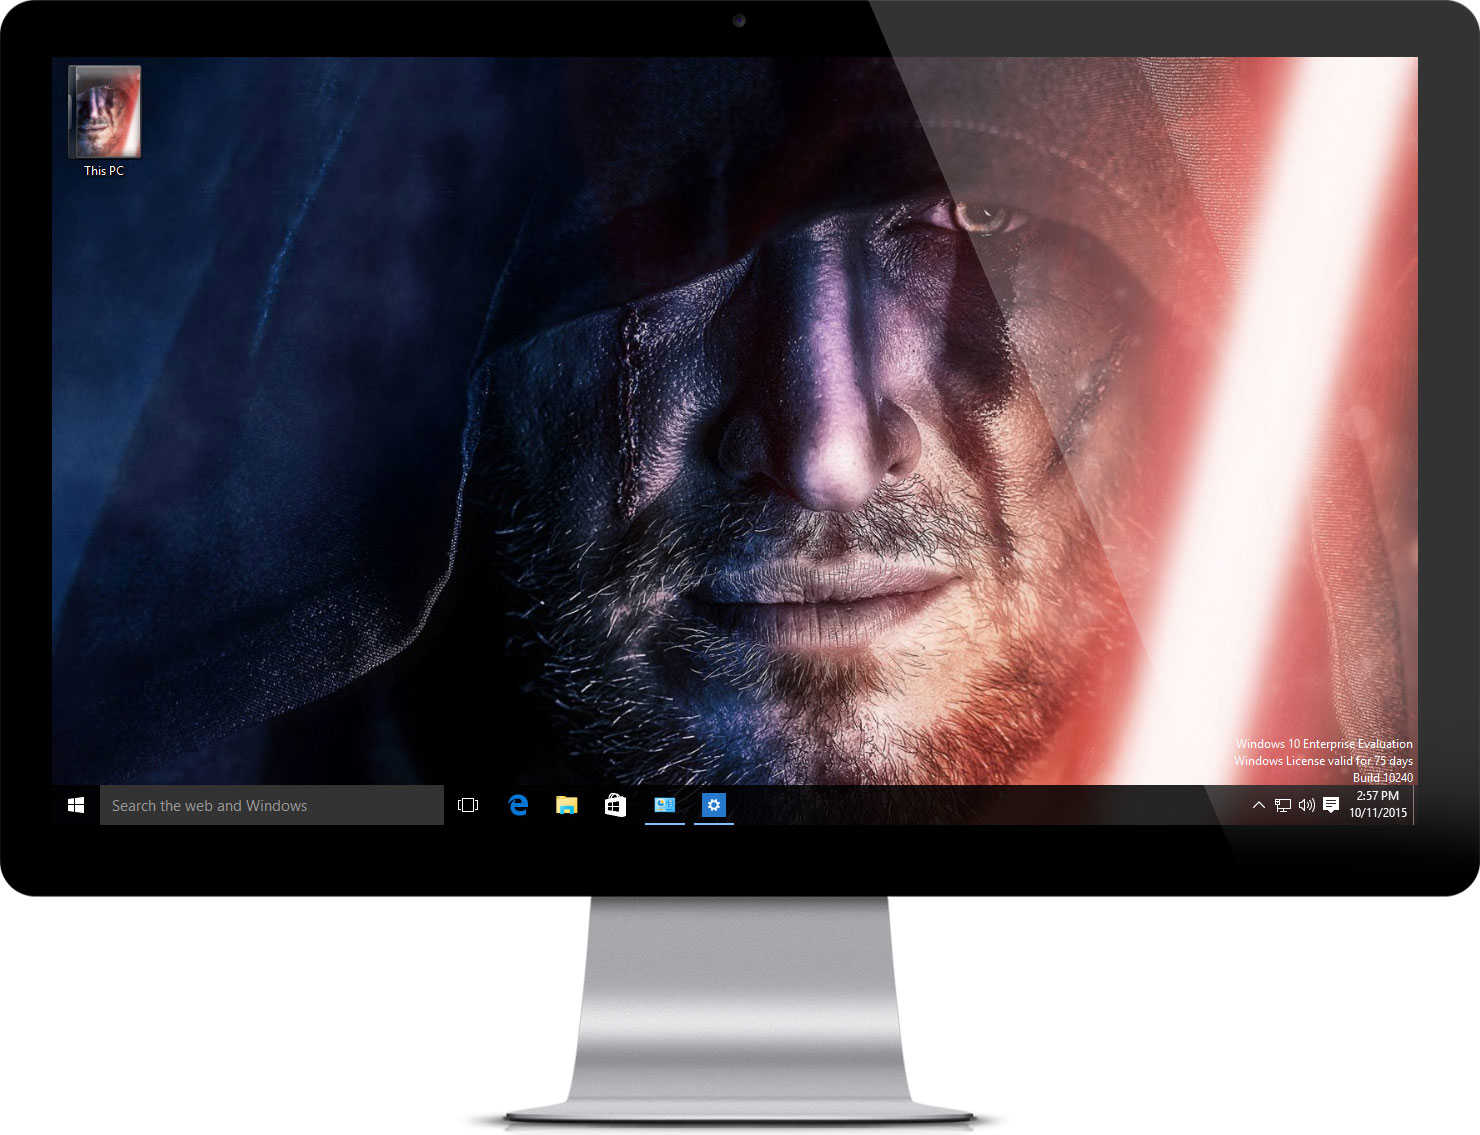 Star Wars The Force Awakens Theme On Windows